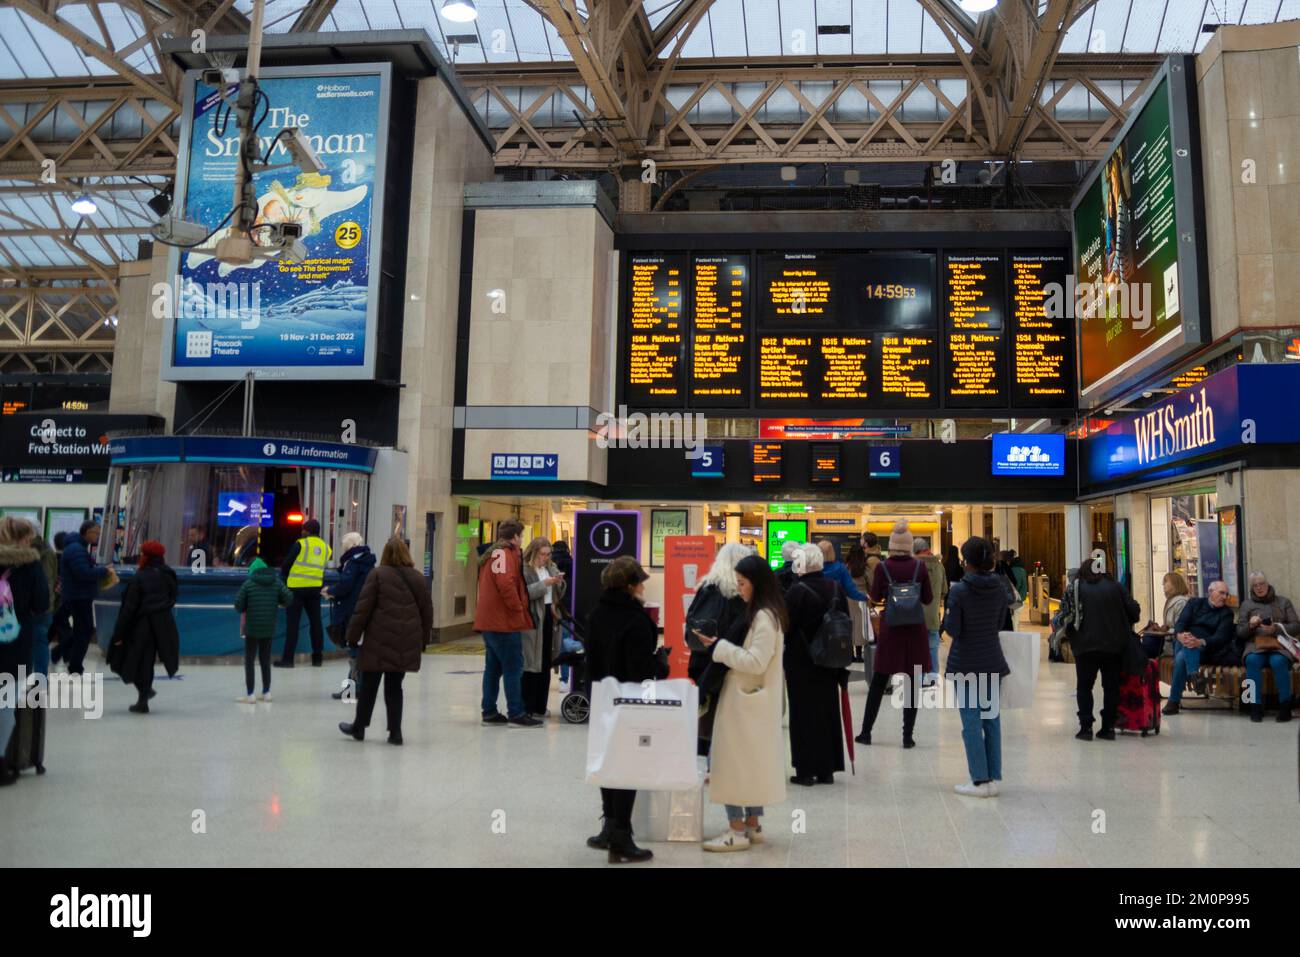 Information board in Charing Cross Railway Station, Westminster, London, UK. Passengers on concourse below information board. Southeastern terminus Stock Photo